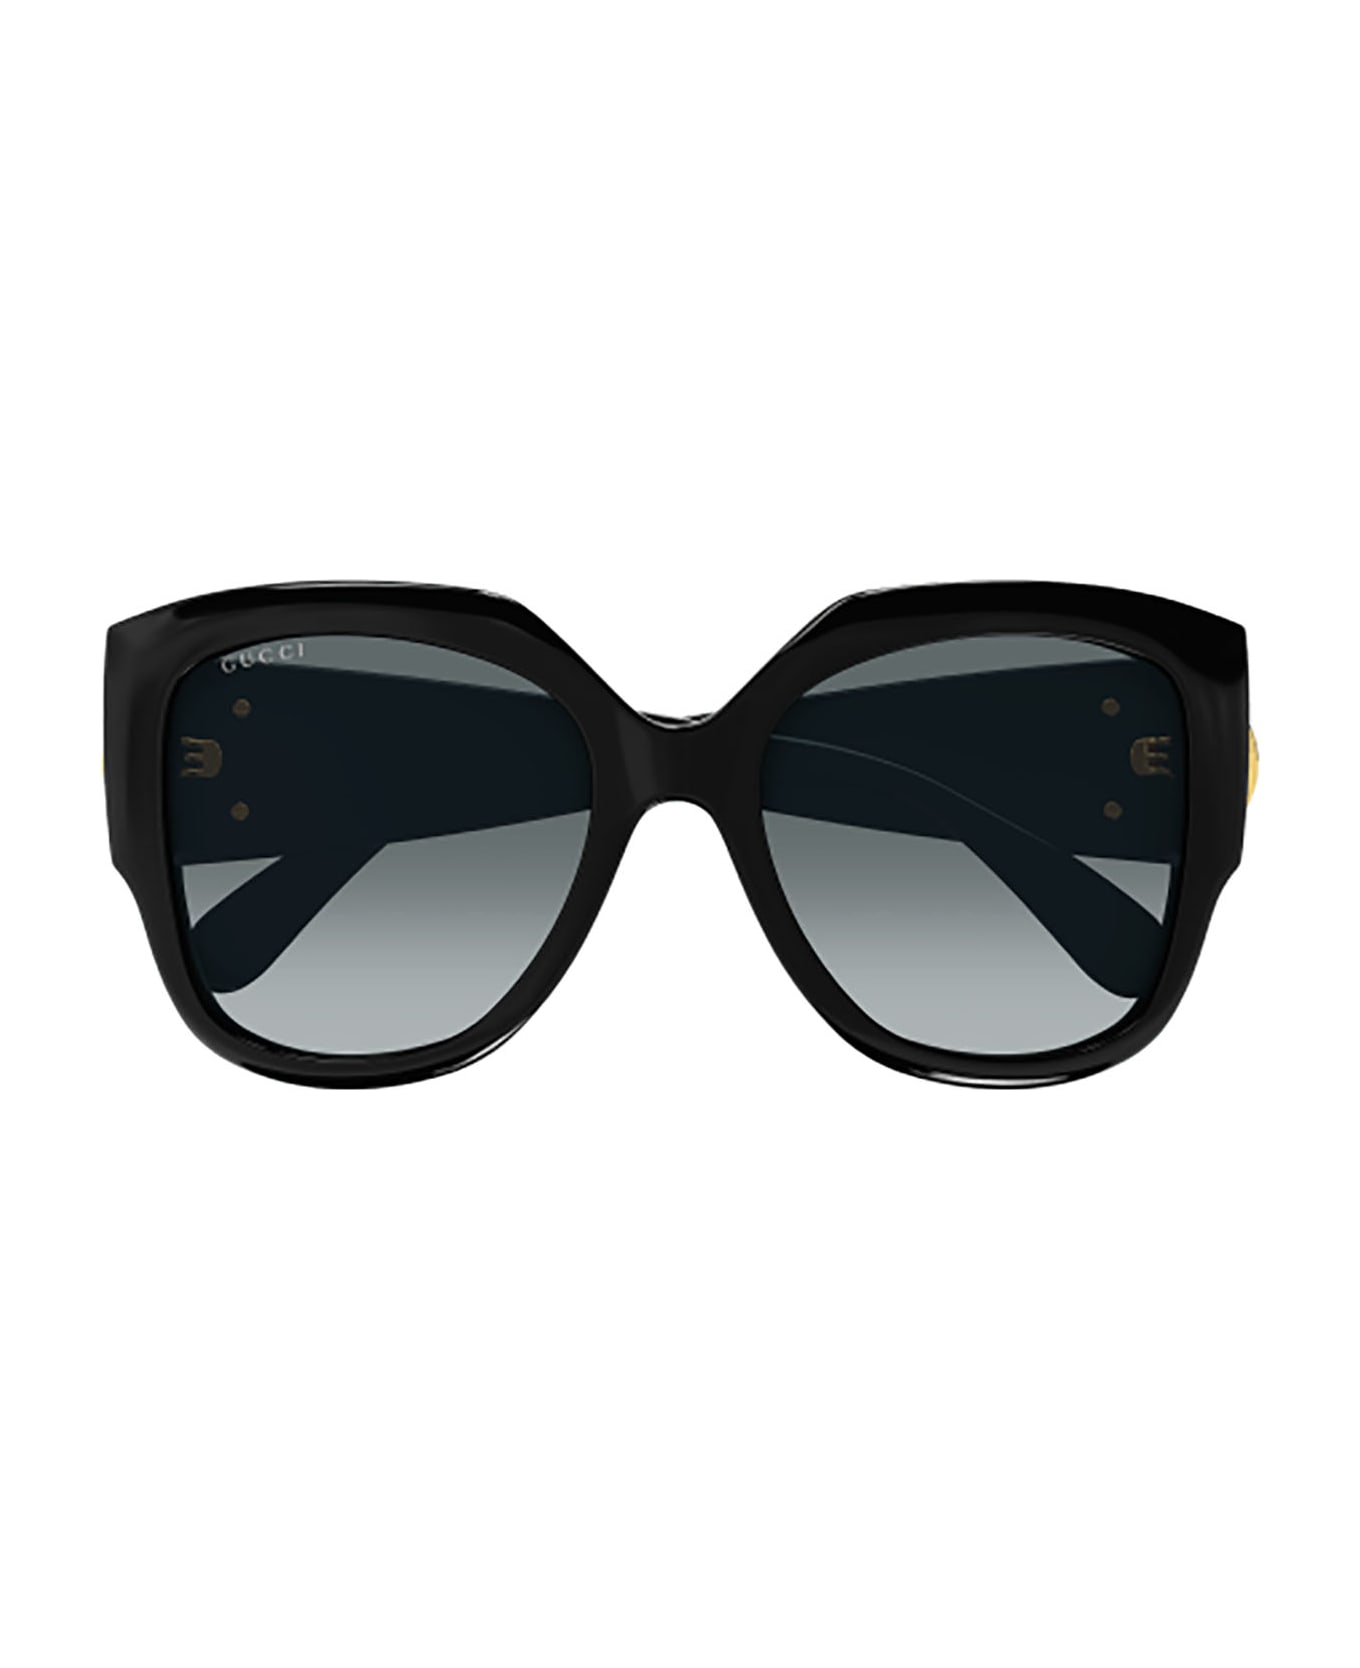 Gucci Eyewear GG1407S Sunglasses - Black Black Grey